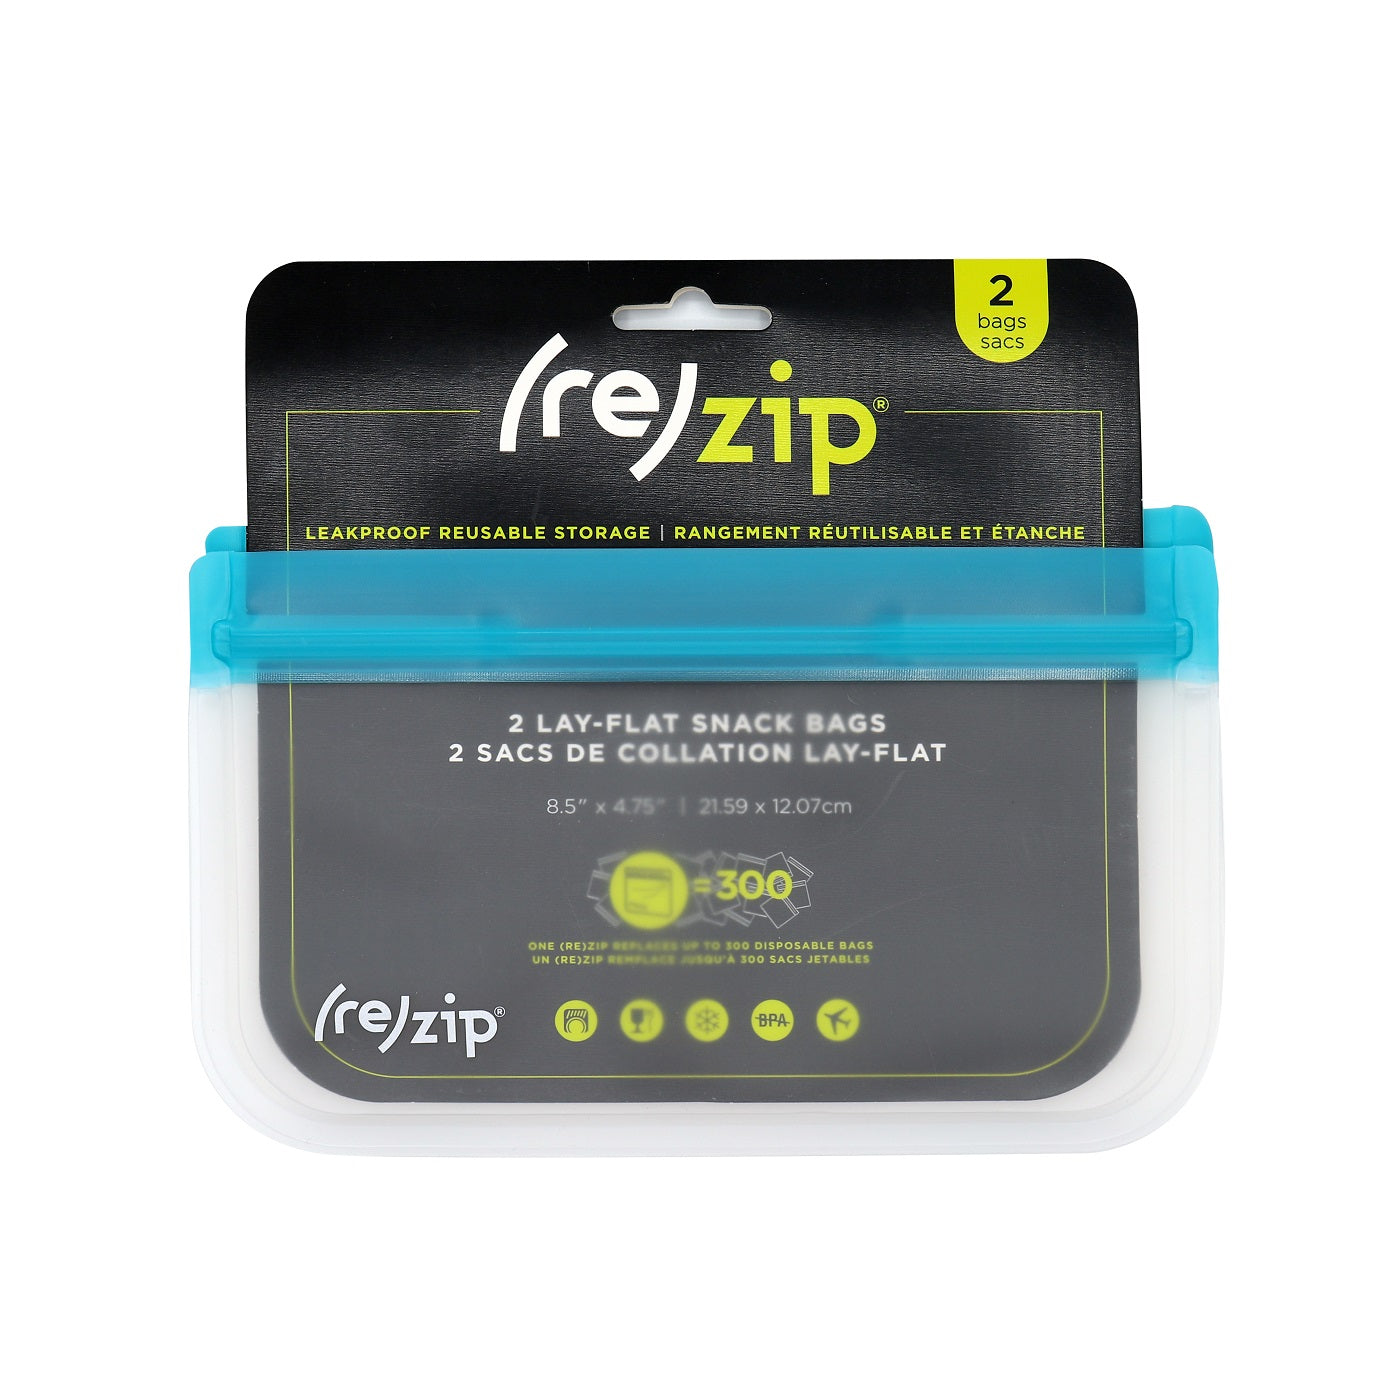 rezip (re)zip Lay-Flat Snack Leak proof Freezer safe Reusable Storage Bag